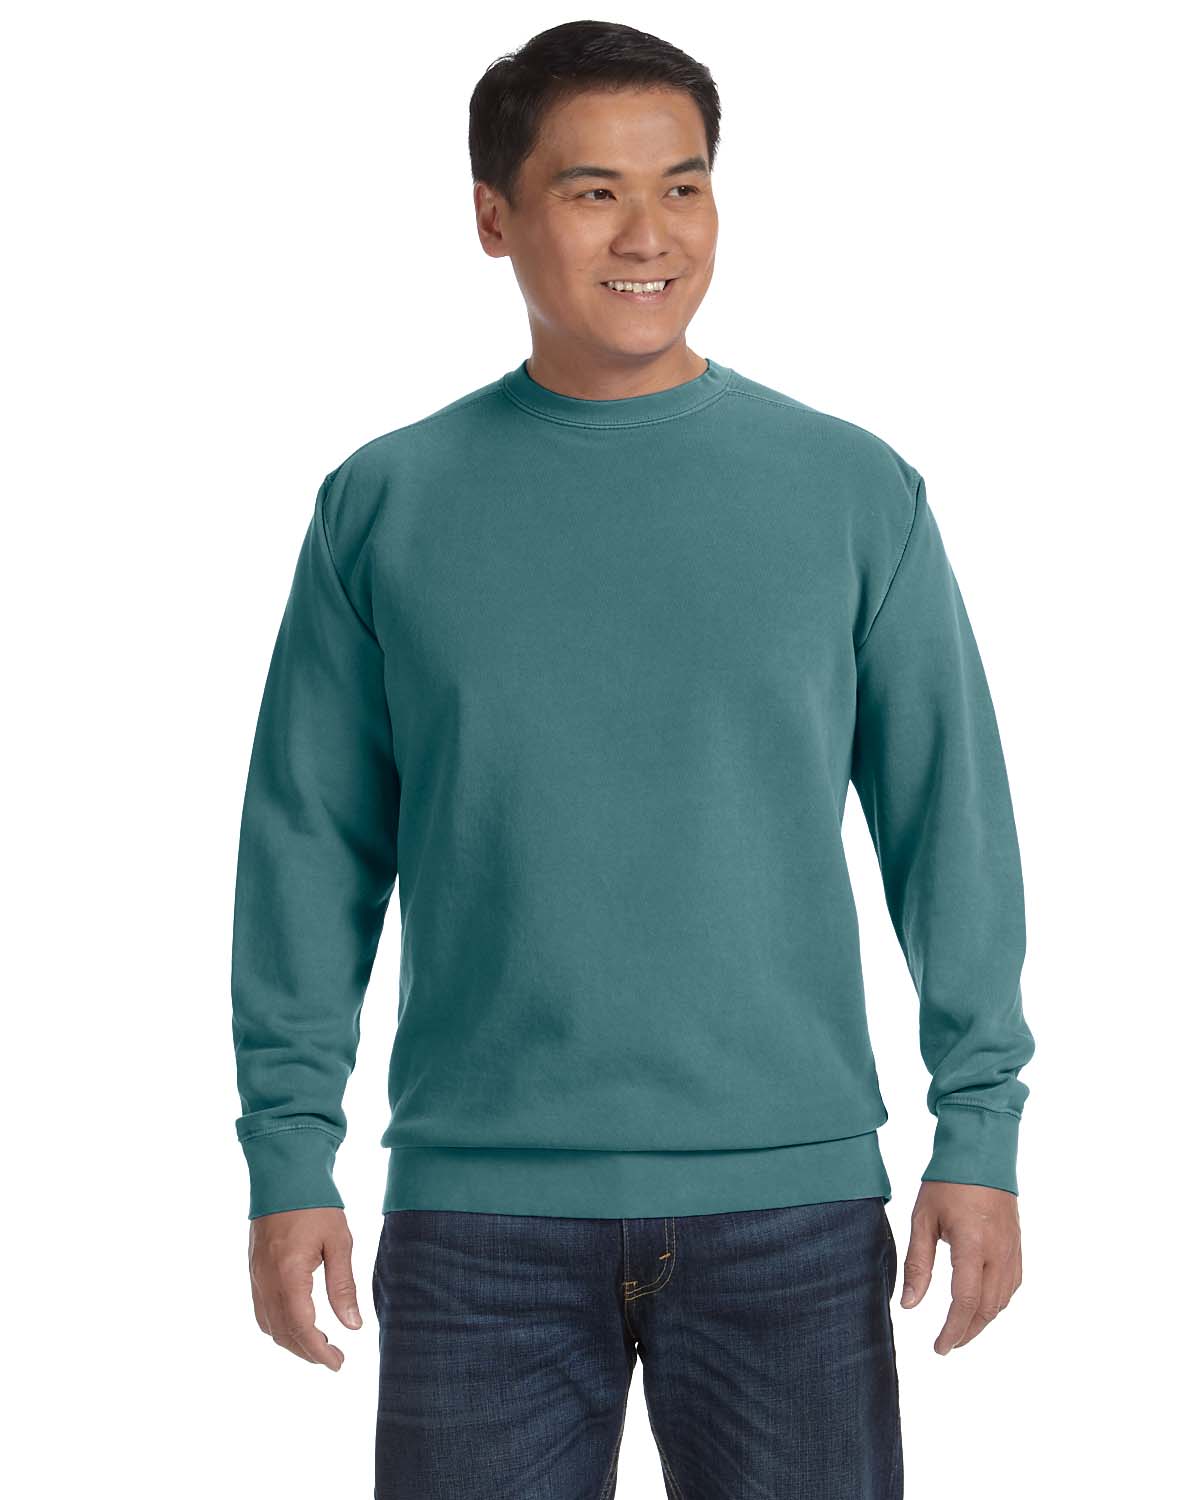 Comfort Colors 1566 Adult Crewneck Sweatshirt - Blue Spruce - S